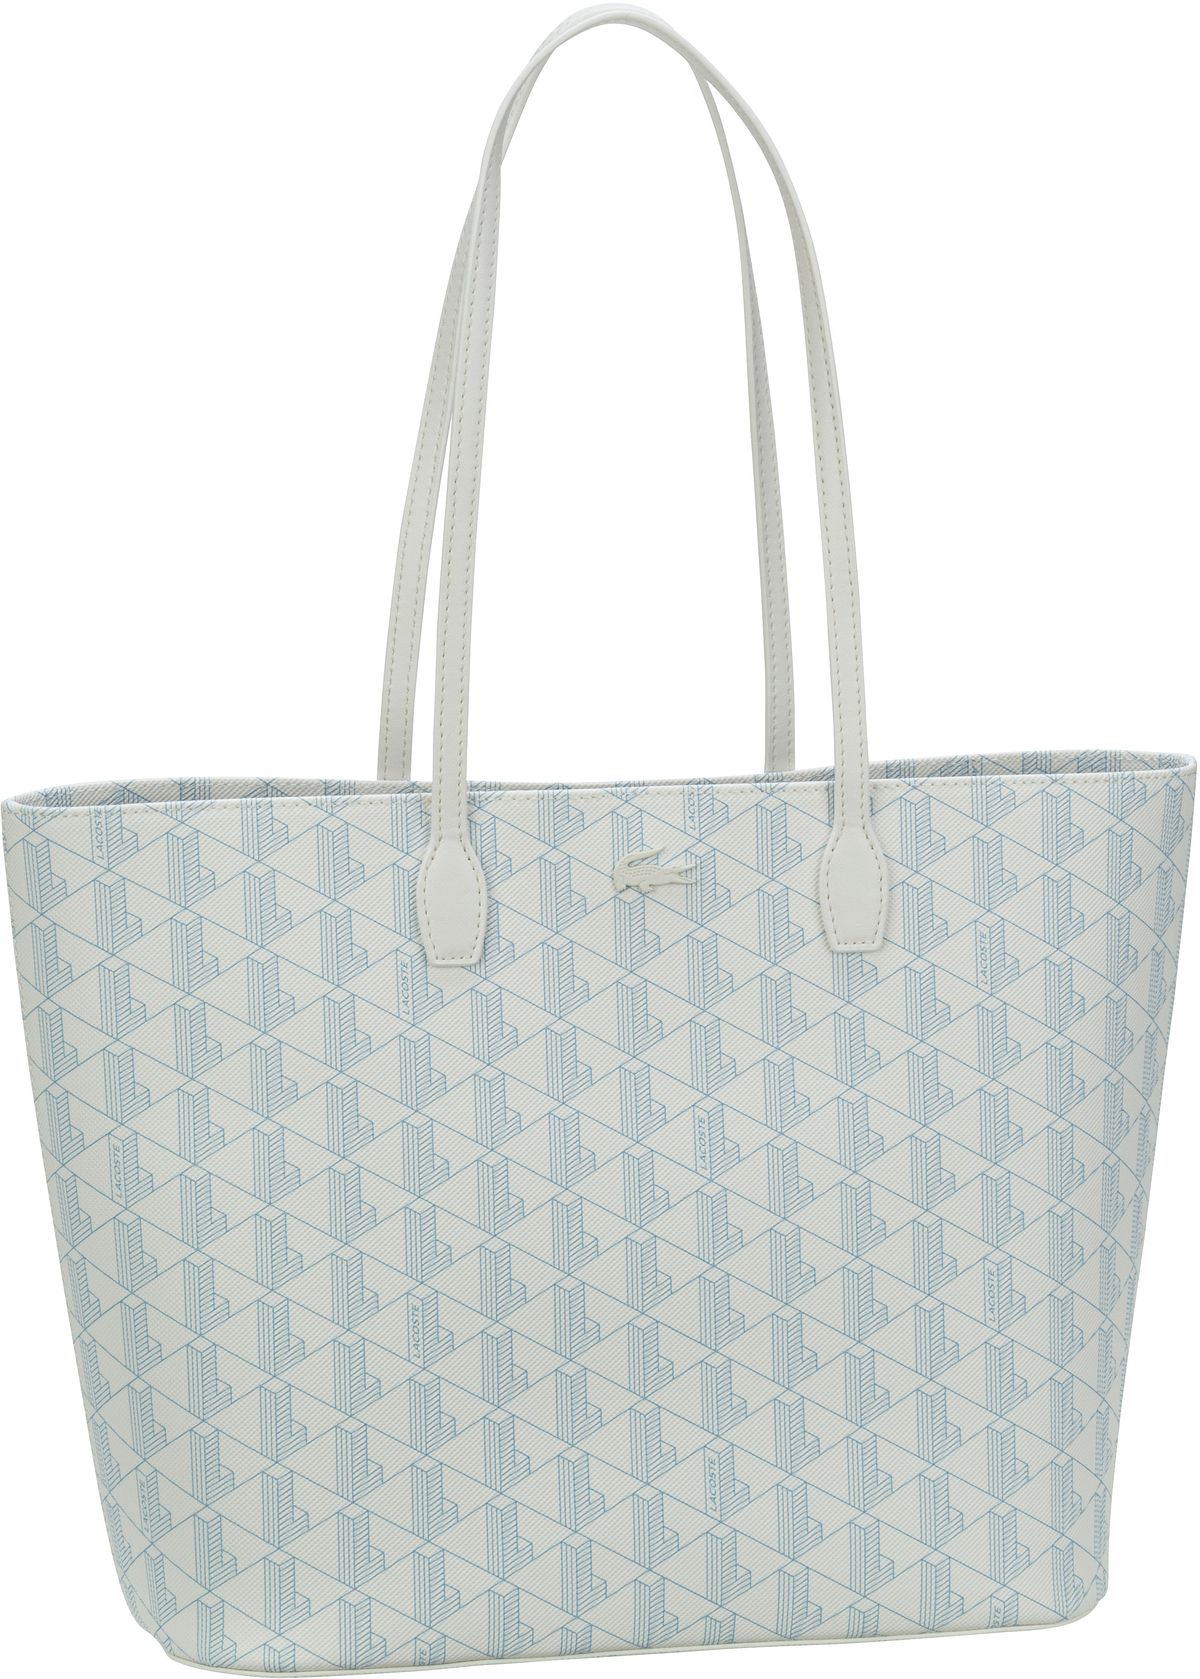 Lacoste Daily Lifestyle Shopping Bag 4208 - Mono Farine Panorama